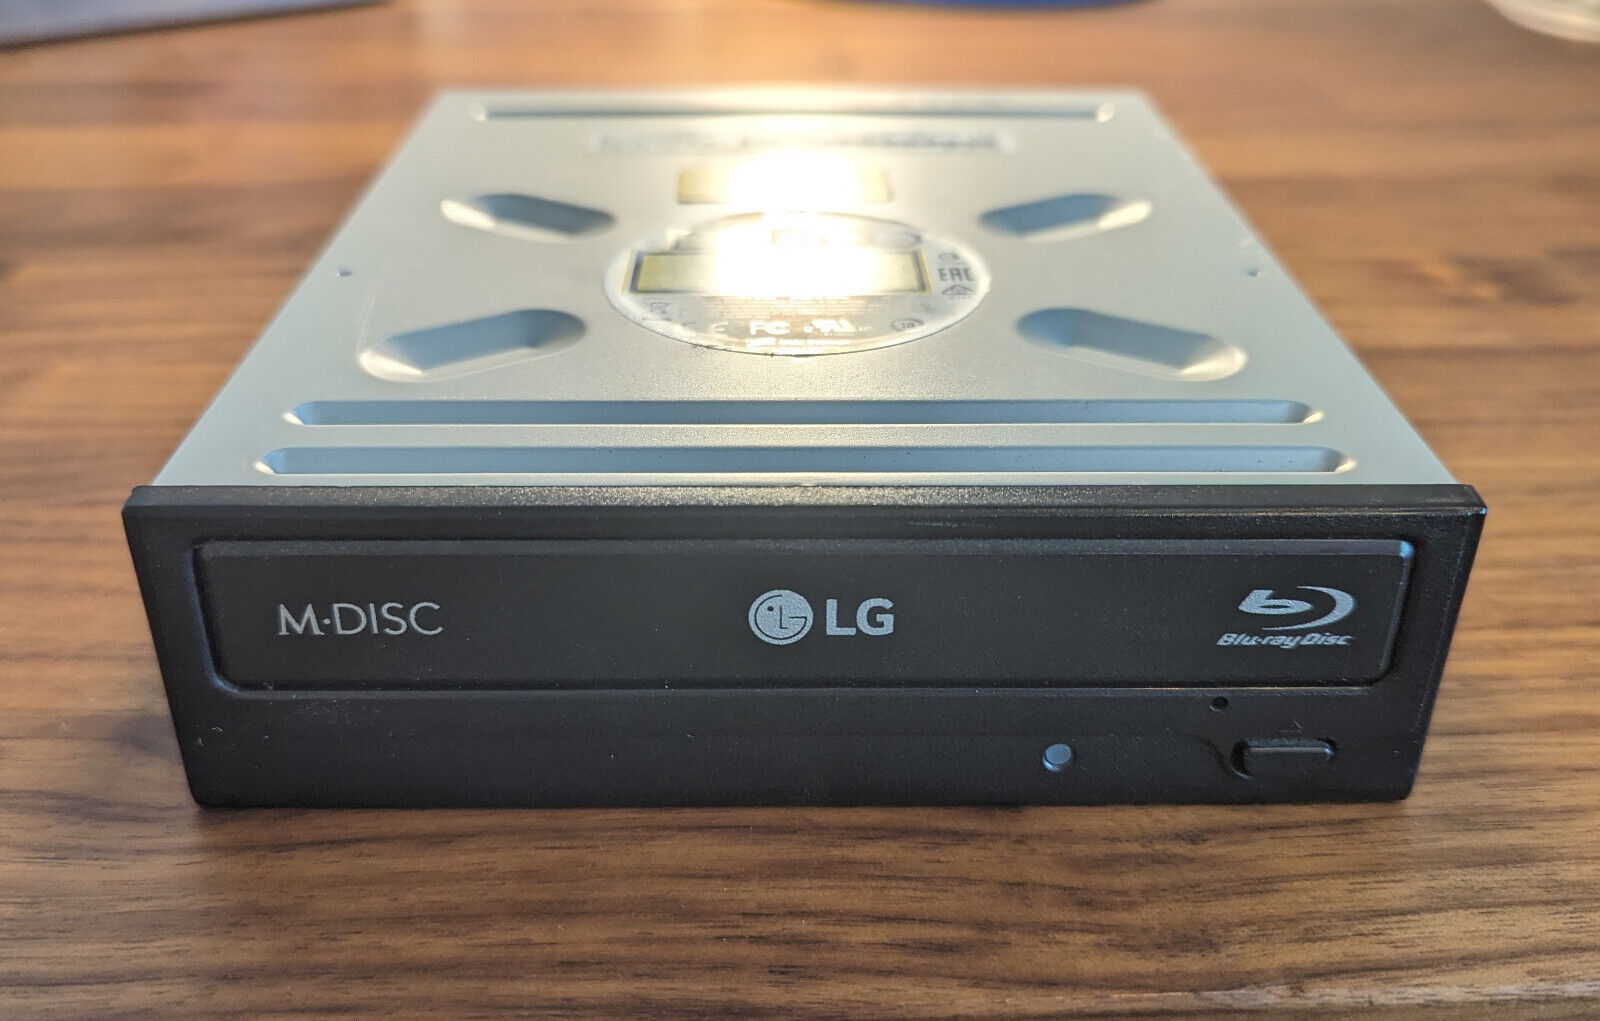 LG WH14NS40 14X Bluray/DVD/CD Internal SATA Rewriter Drive, BDXL, M-DISC Support